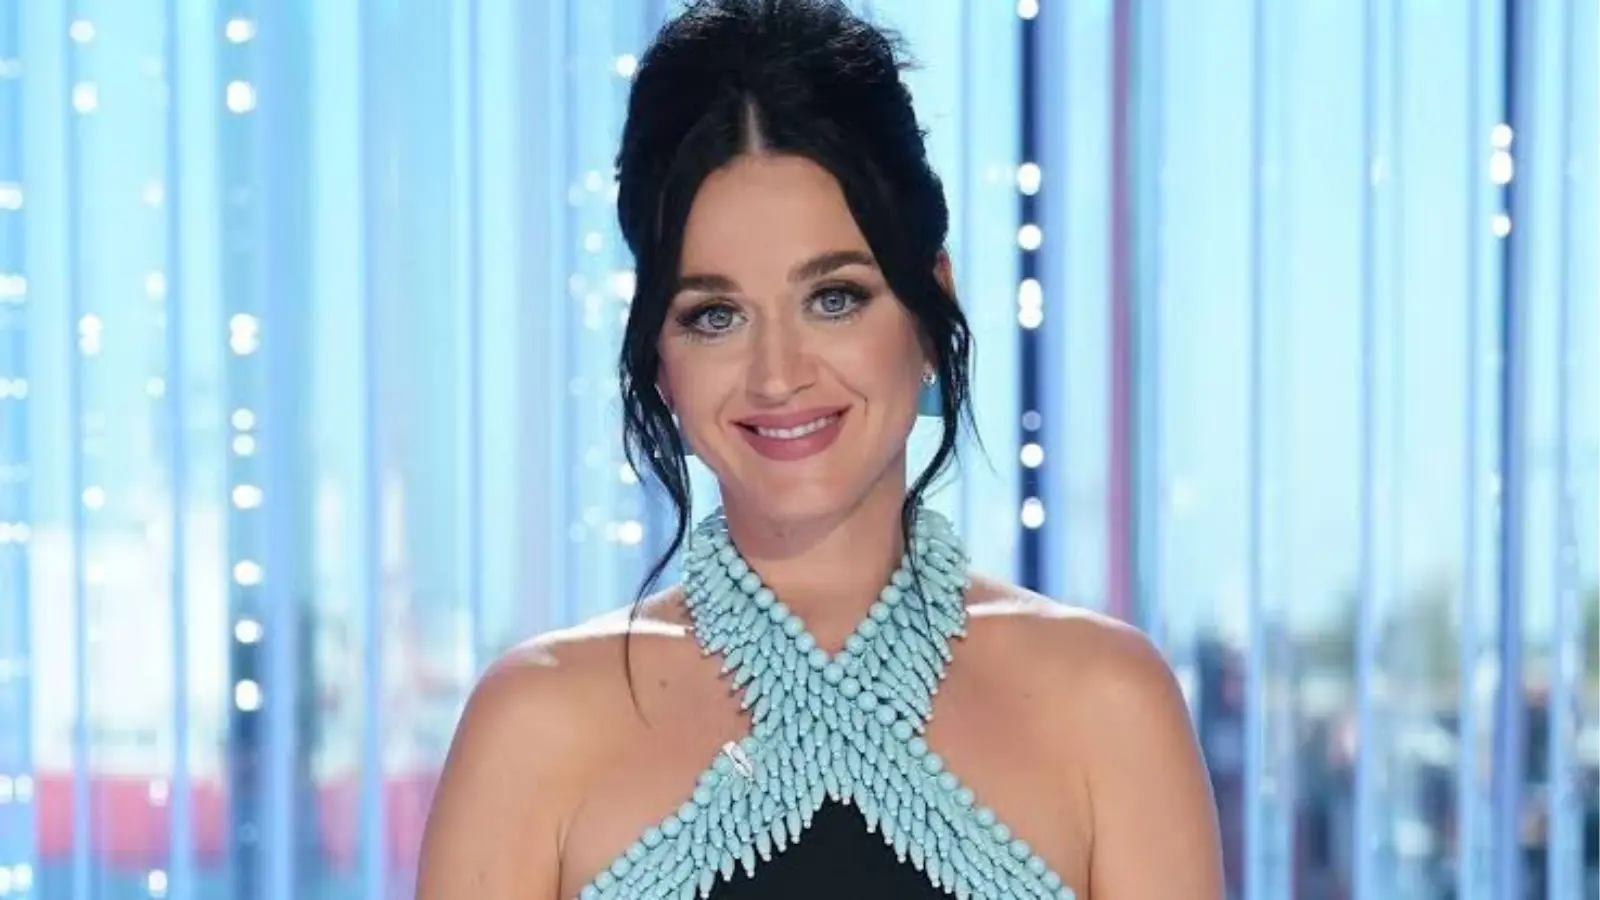 Judge Katy Perry on American Idol